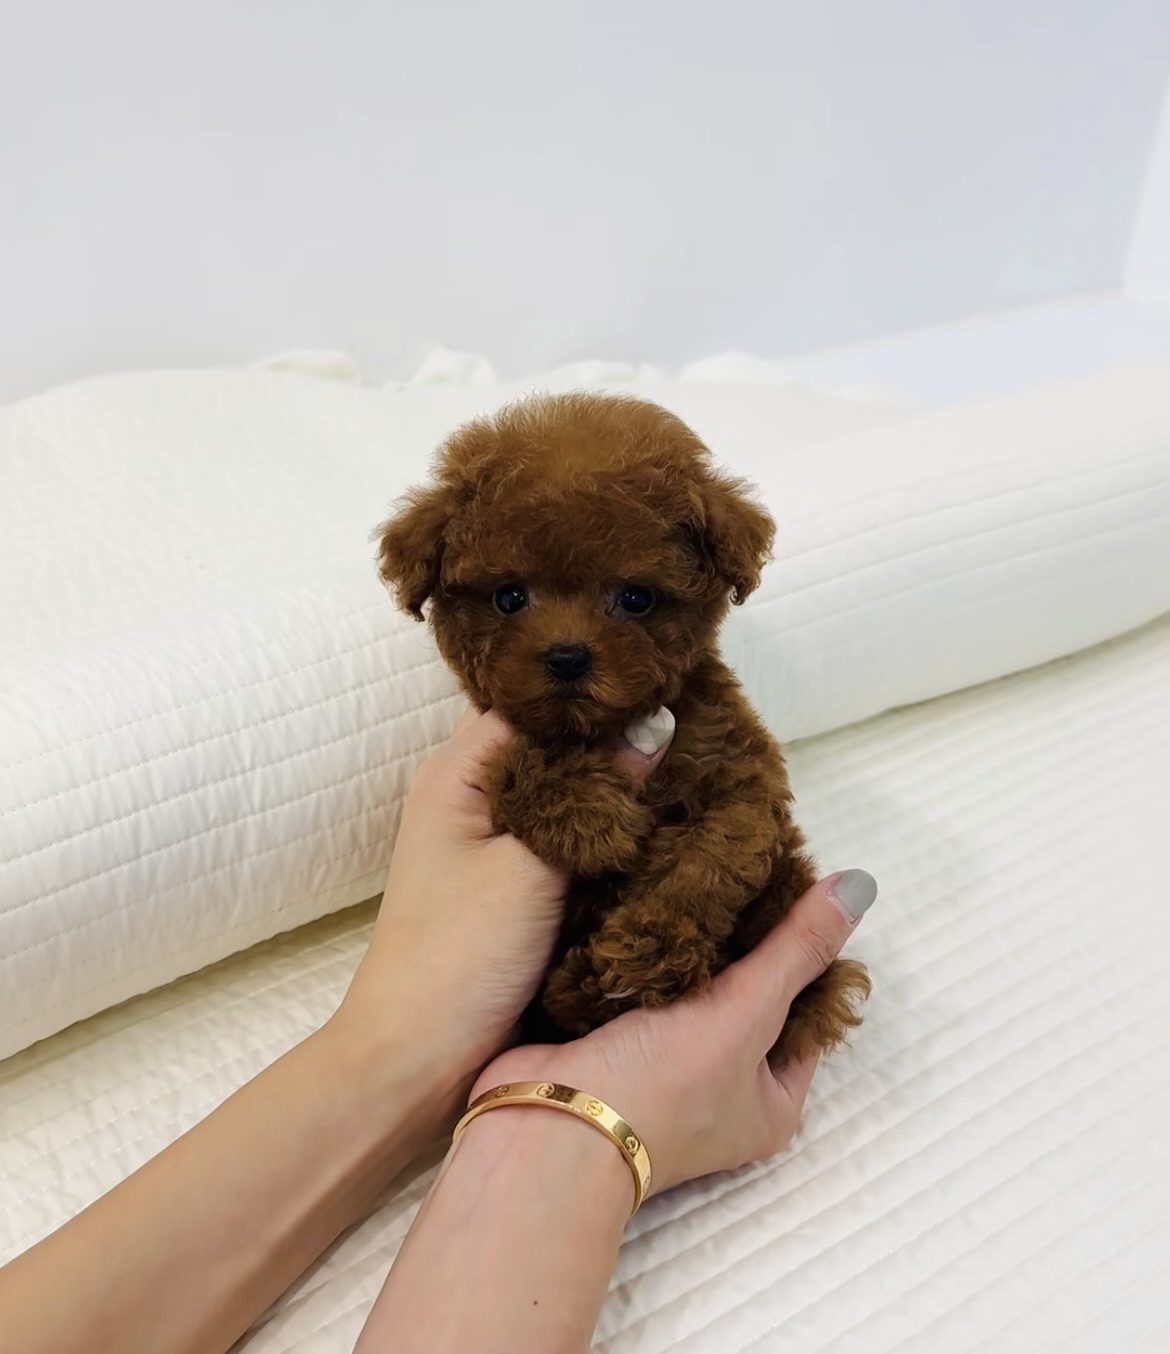 Teddy - Teacup Poodle